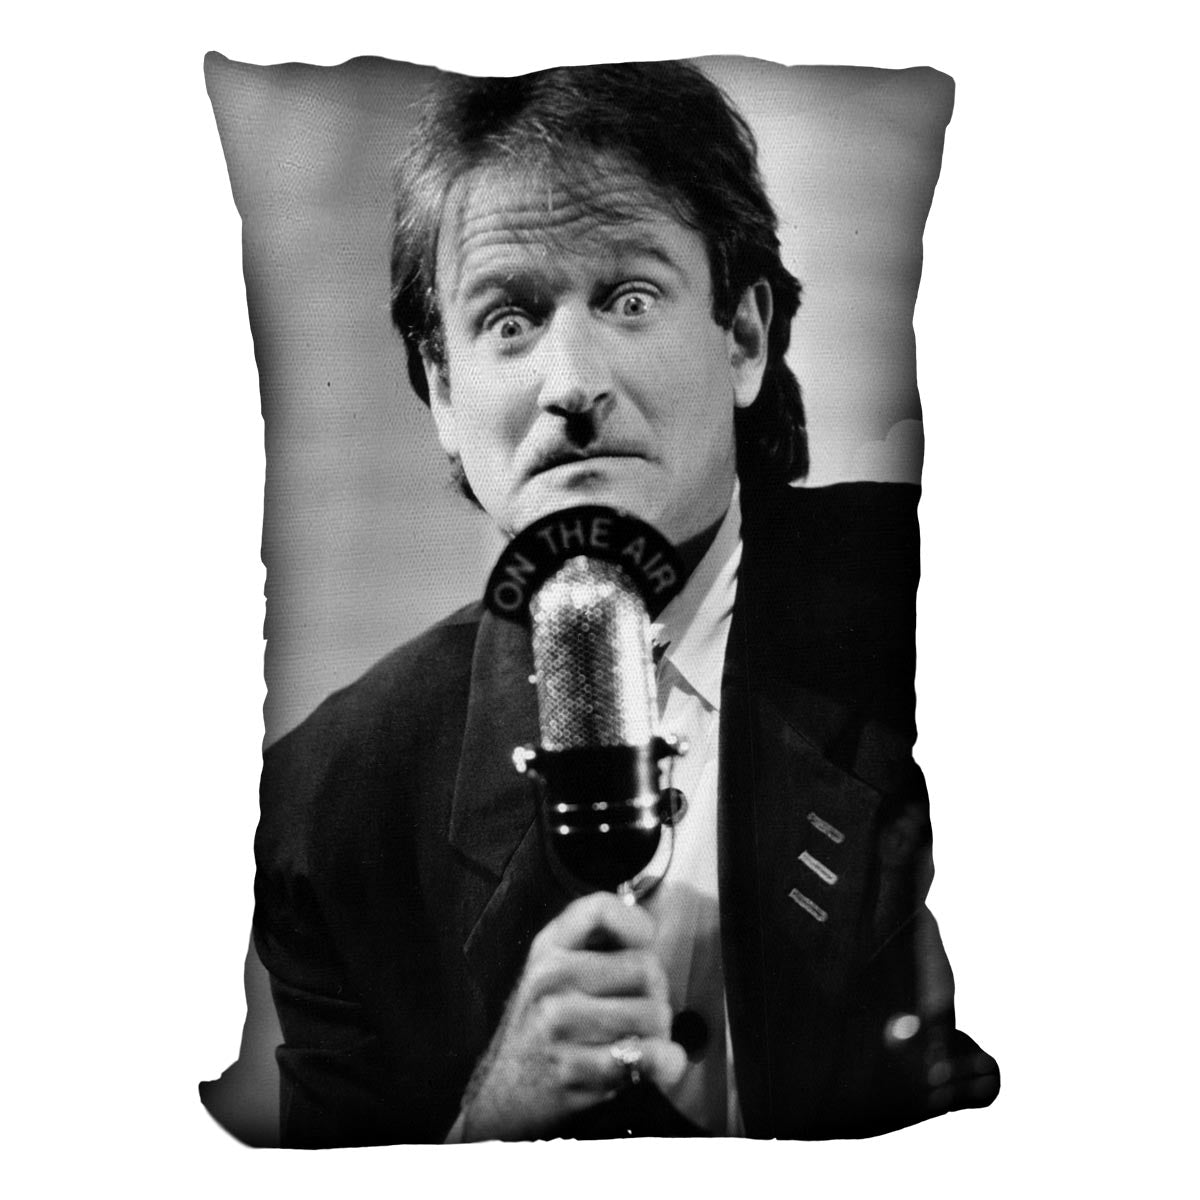 Robin Williams at the microphone Cushion